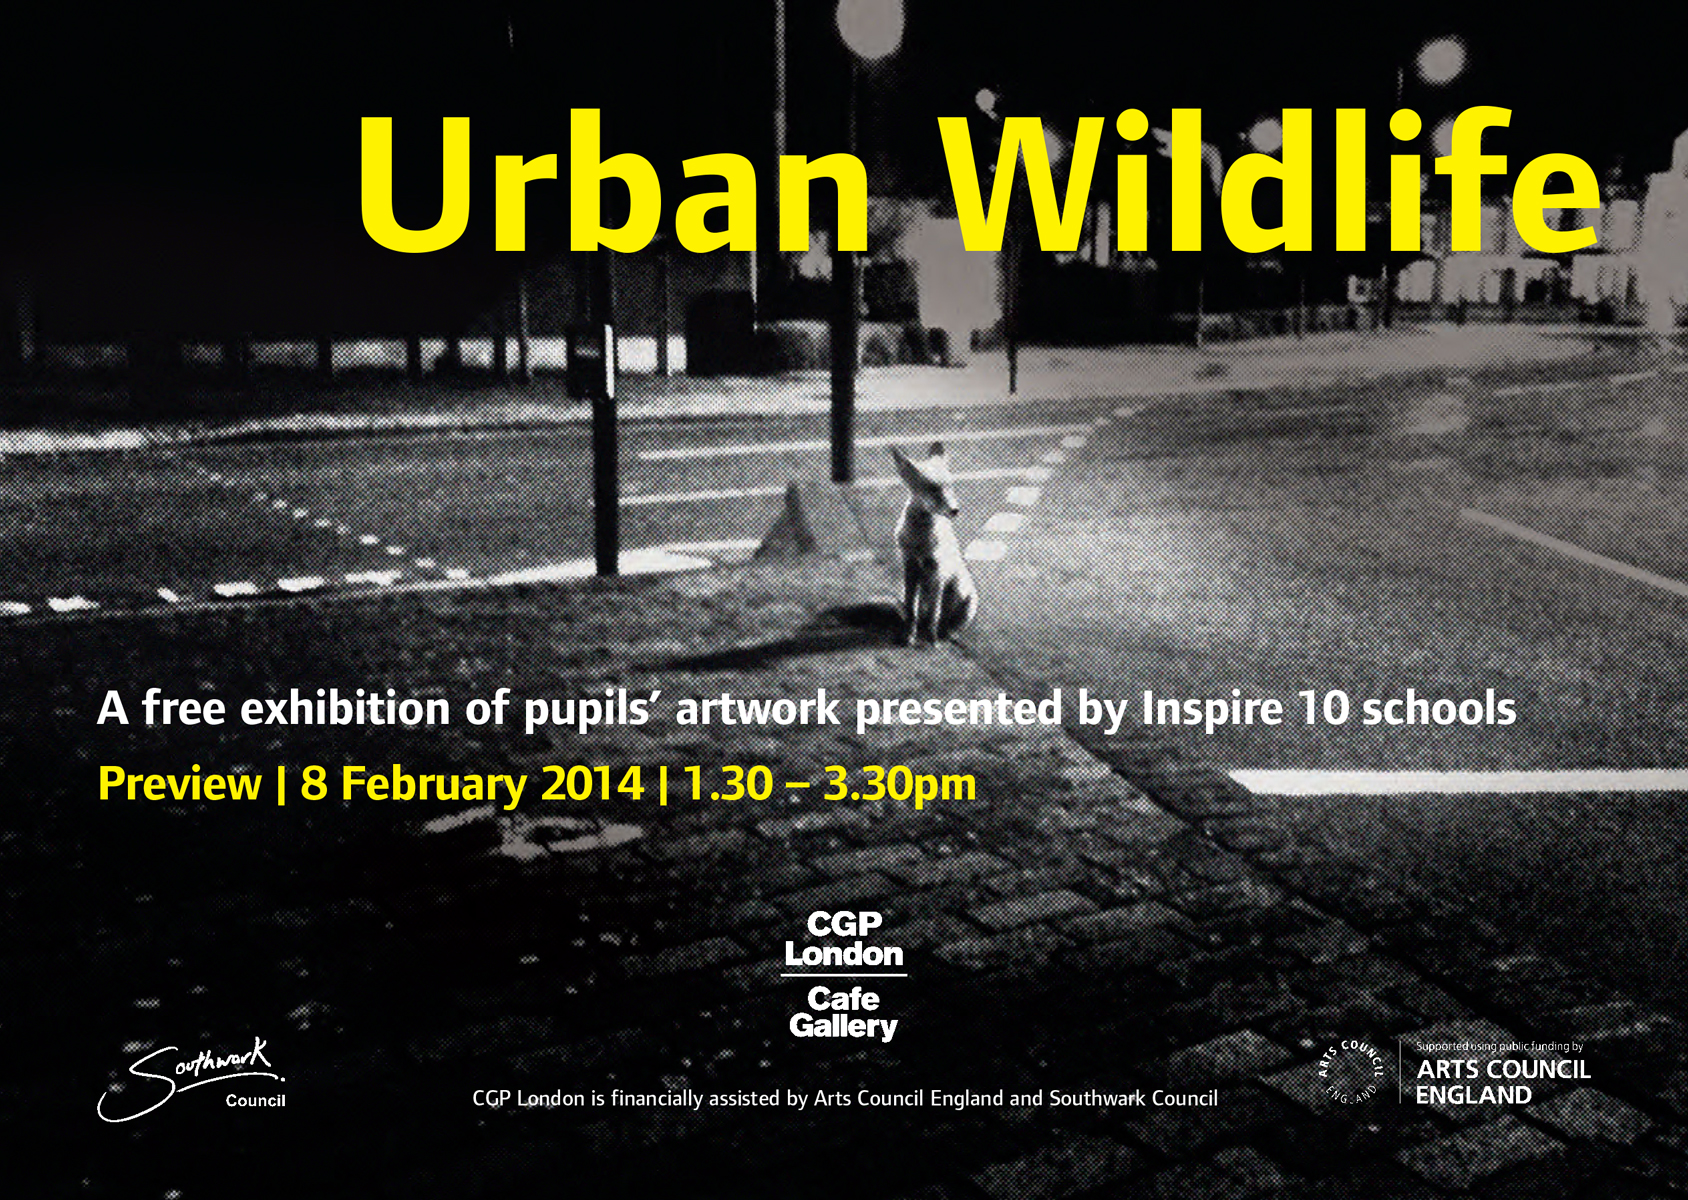 Urban Wildlife Pupils' Artwork Presented by Inspire 10 Schools